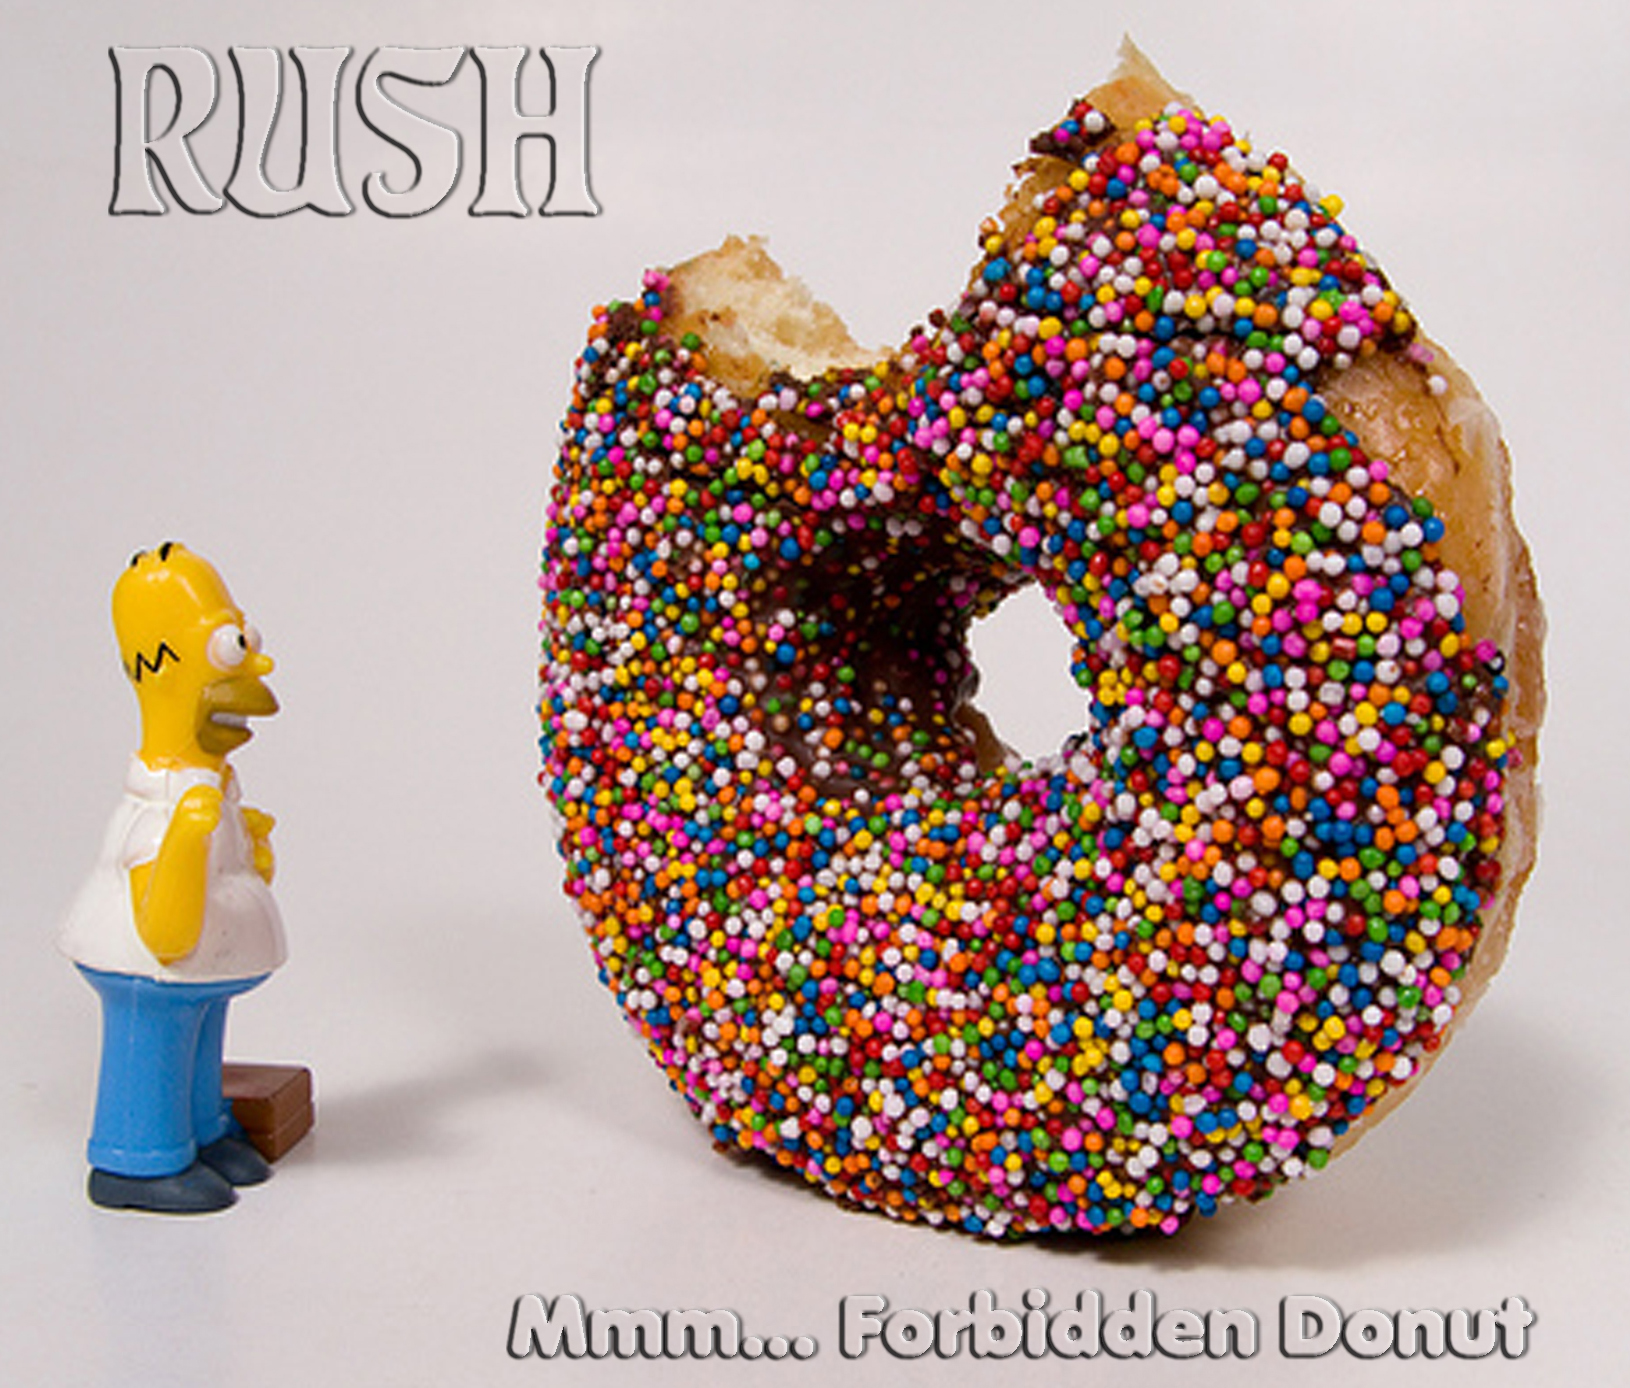 Rush - Mmm... Forbidden Donut